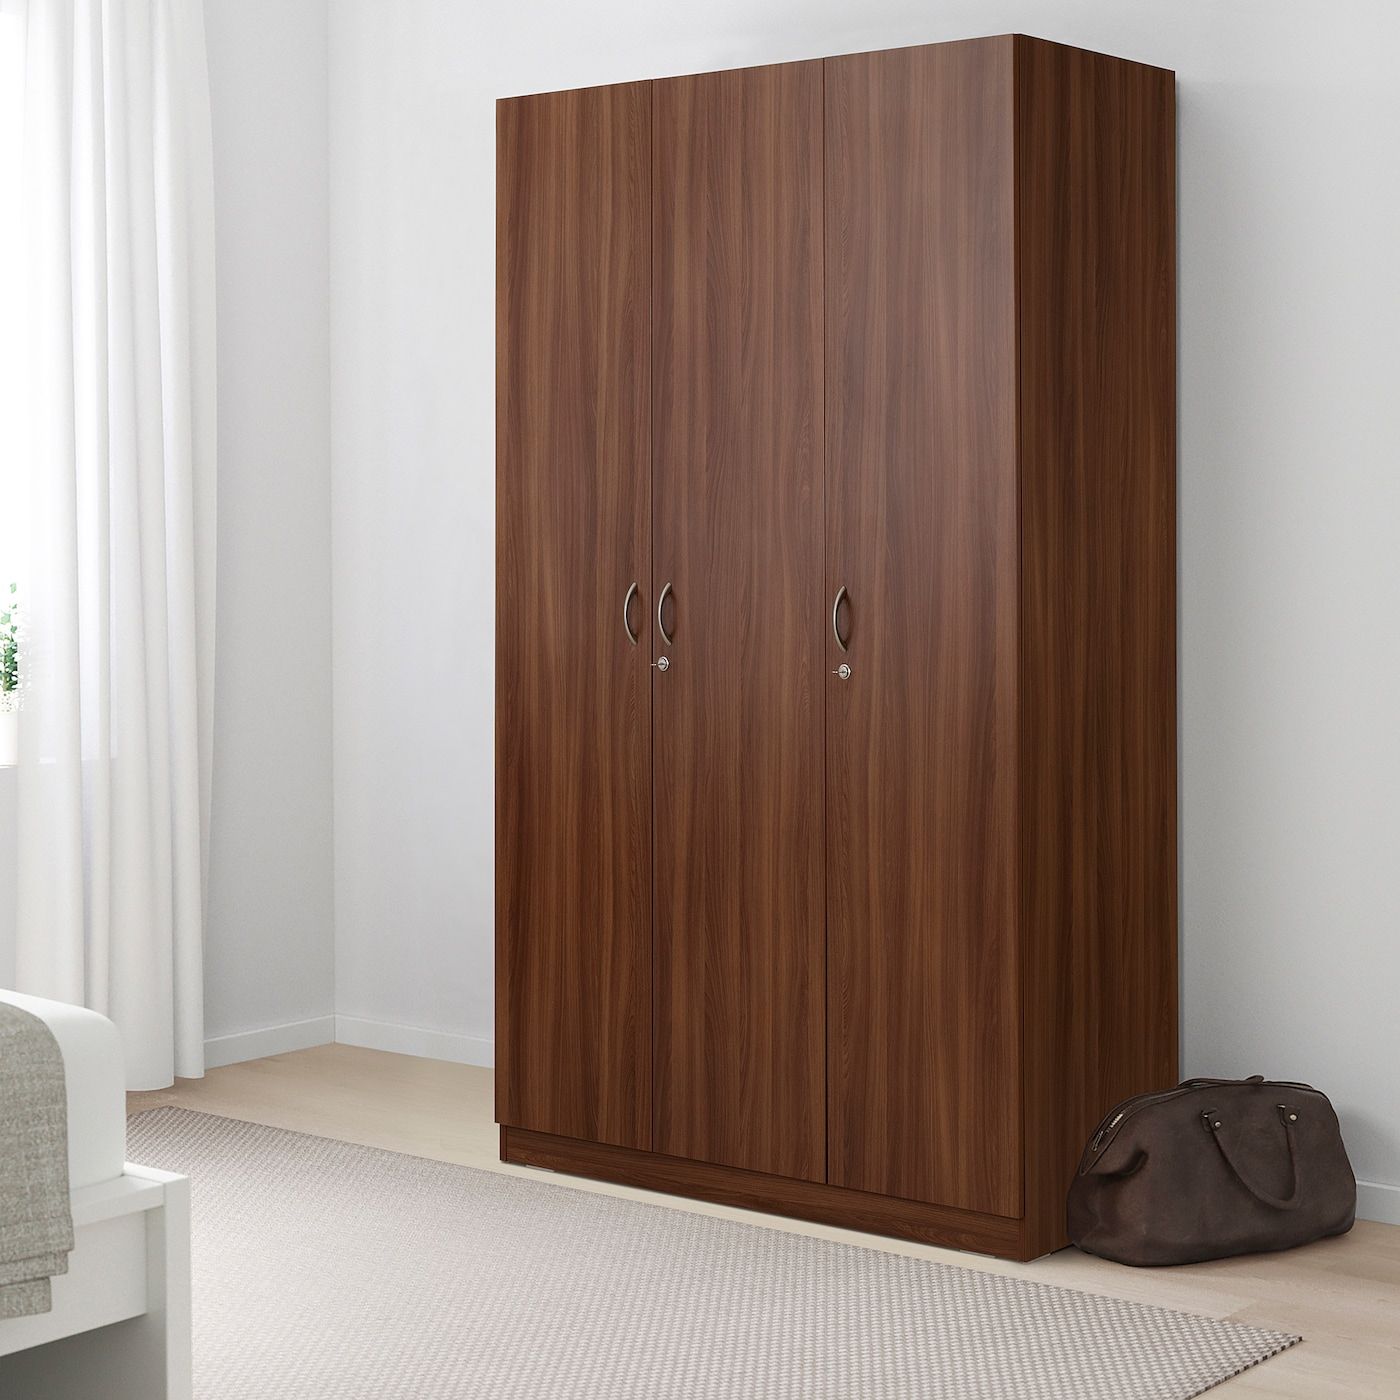 Nodeland Wardrobe With 3 Doors, Medium Brown, 120x52x202 Cm  (471/4x203/8x791/2") – Ikea Inside Medium Size Wardrobes (View 10 of 15)